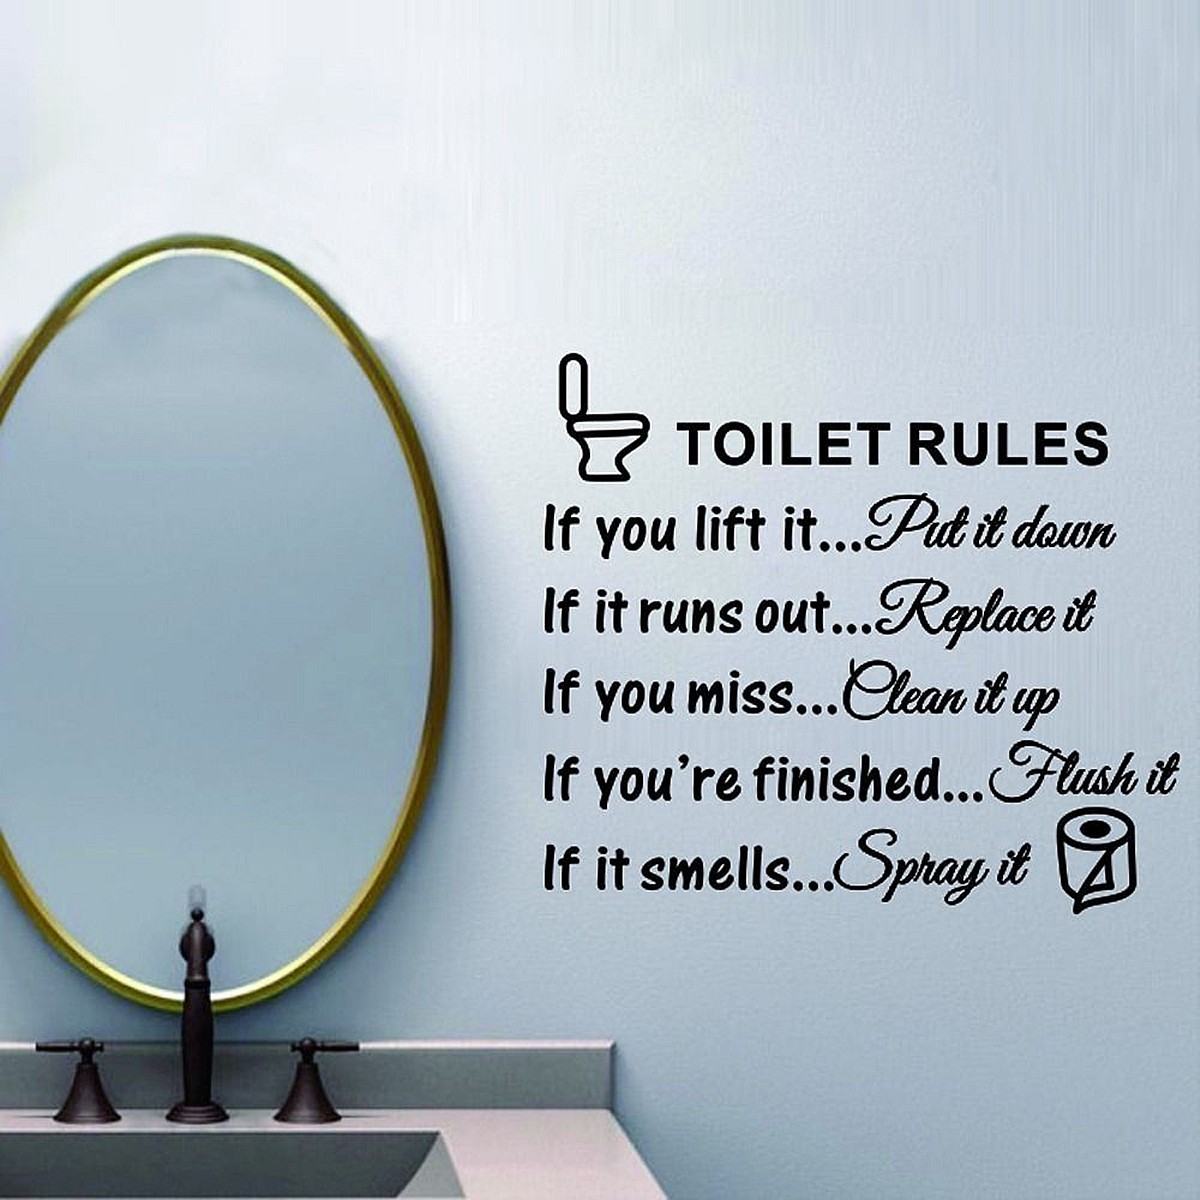 DIY-Toilet-Rules-Bathroom-Toilet-Wall-Sticker-Vinyl-Art-Decals-Home-Office-Decoration-1722046-7